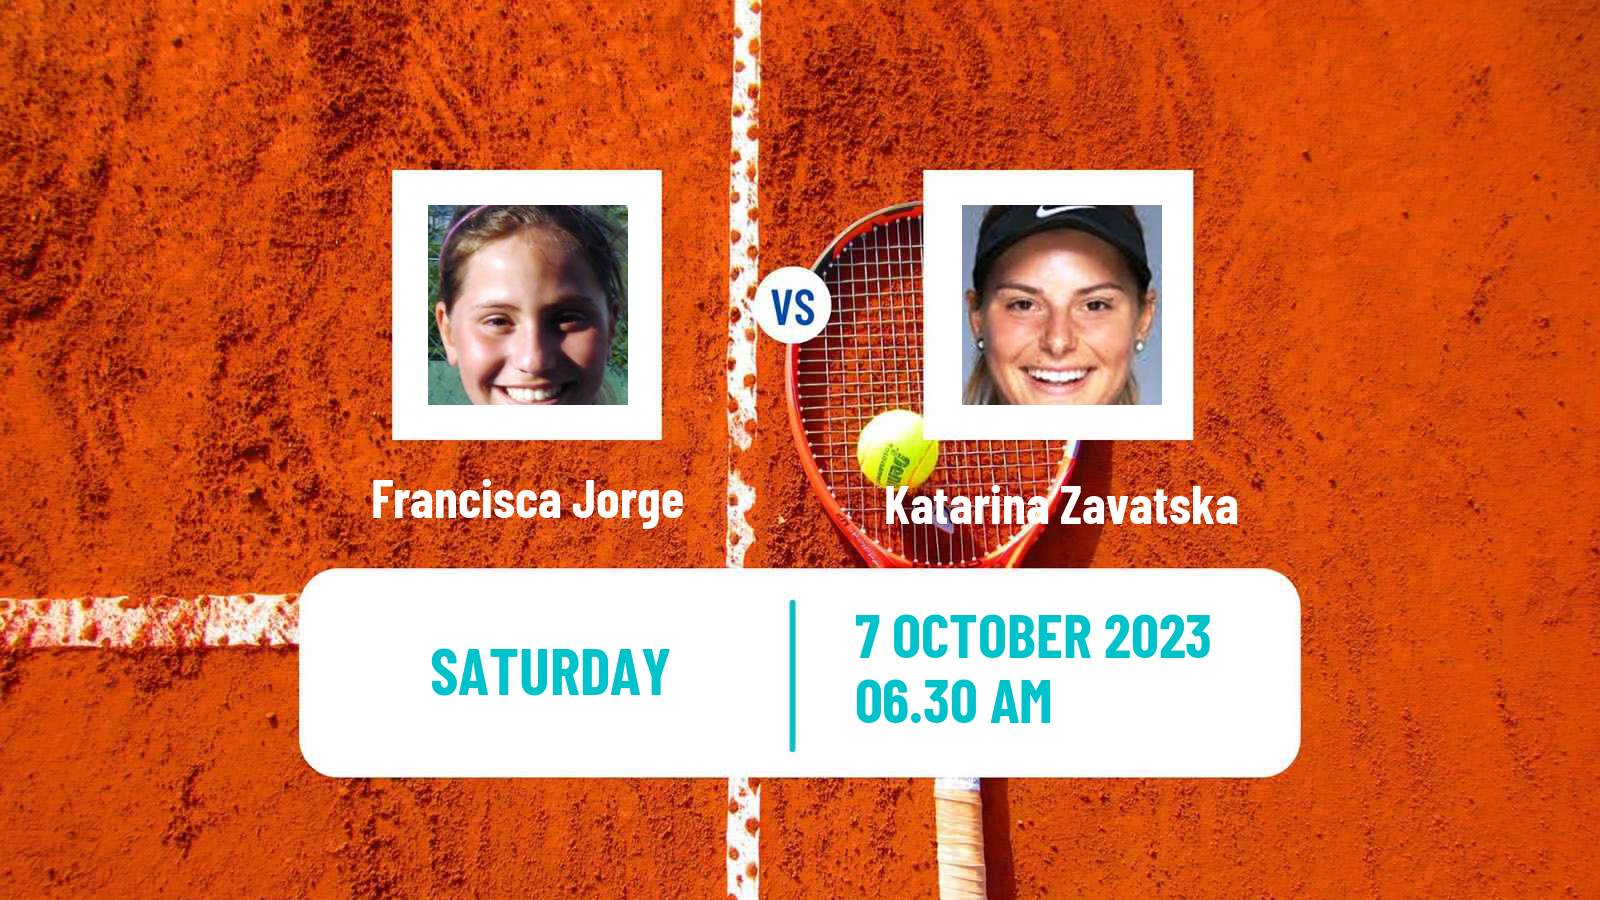 Tennis ITF W40 Lisbon Women Francisca Jorge - Katarina Zavatska